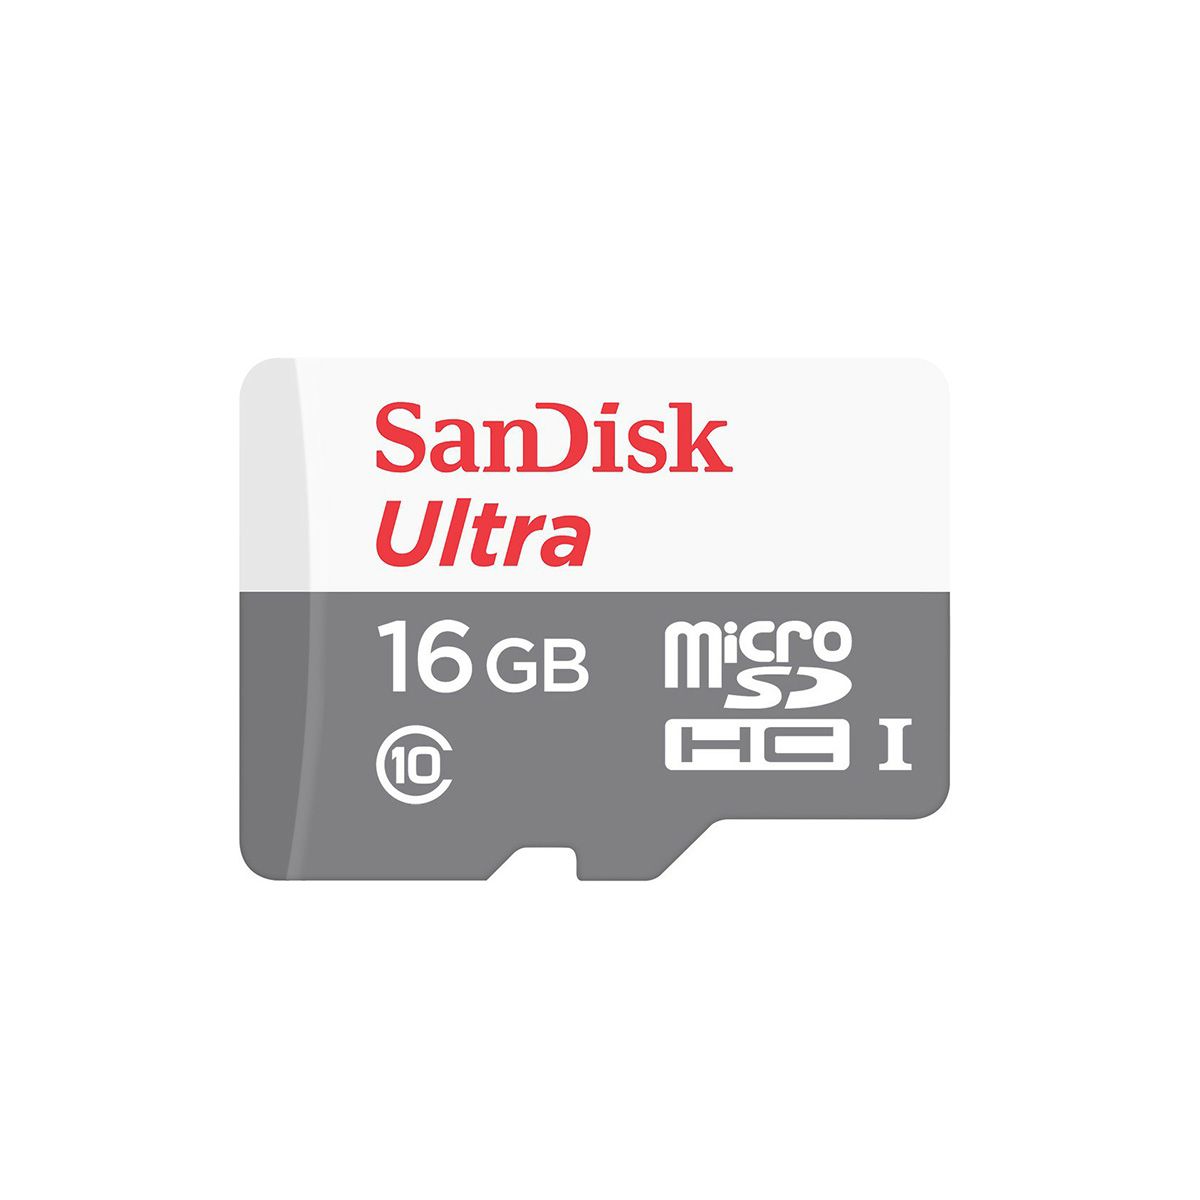 Sandisk Ultra Micro SDHC UHS-I Class10 MemoryCard 16GB